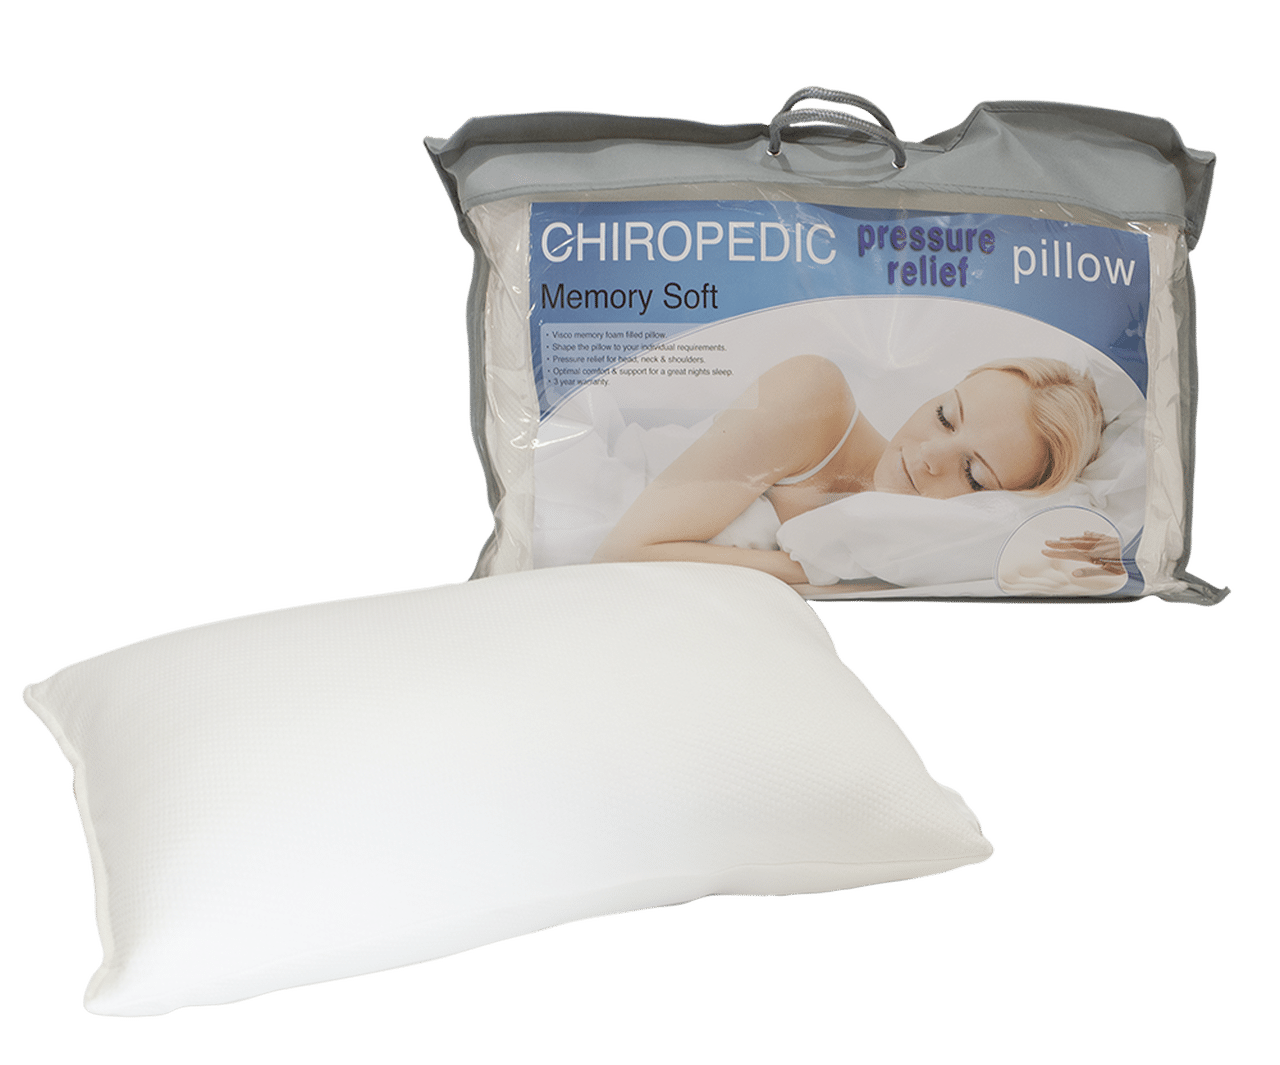 Chiropedic Pressure Relief Pillow Memory Soft